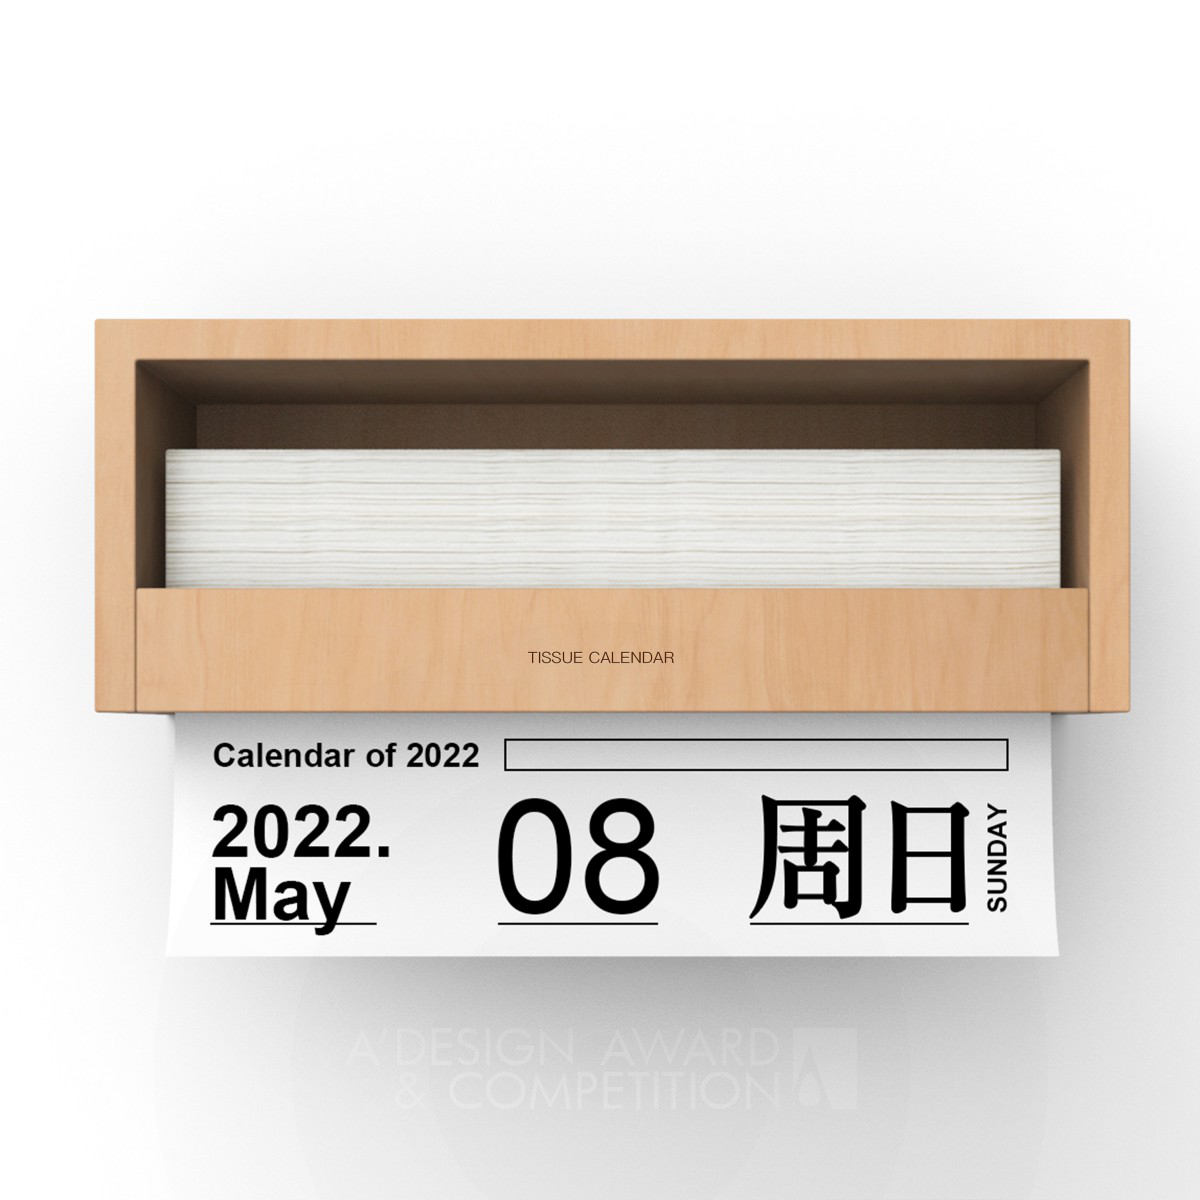 Draw One Calendar by Dan Wang and Ziqiang He Bronze Idea and Conceptual Design Award Winner 2022 